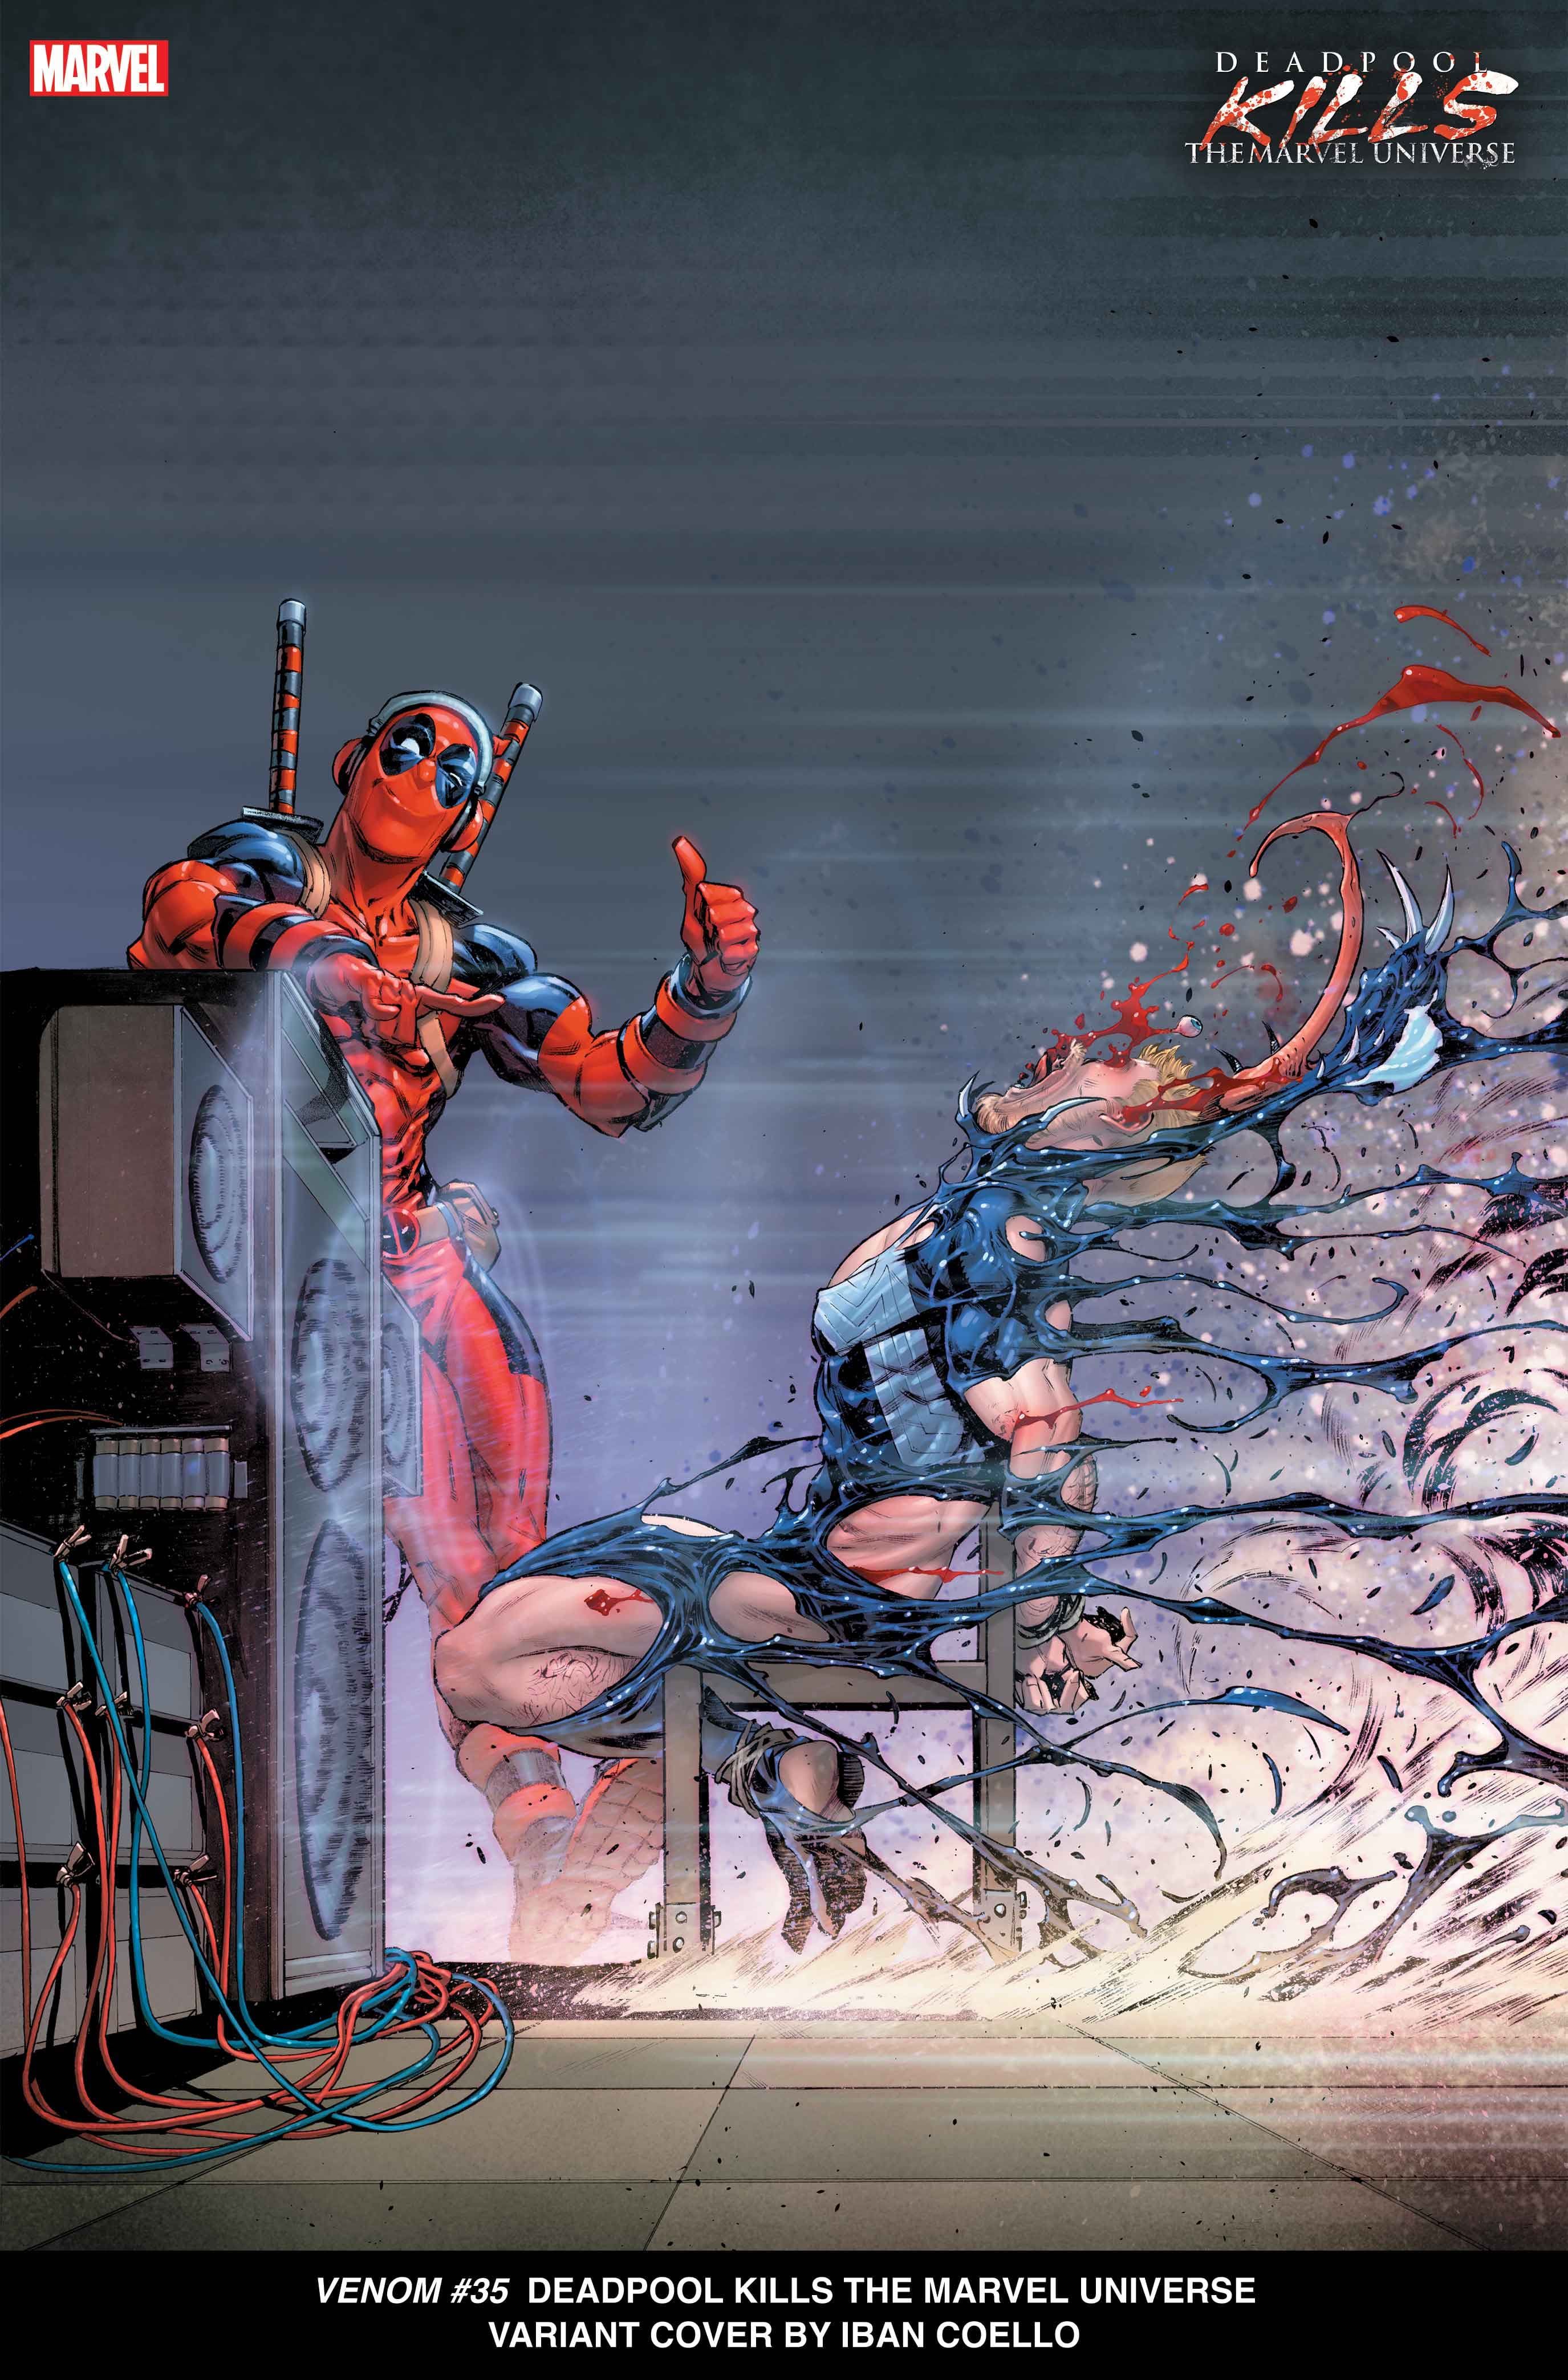 VENOM #35 Deadpool Kills the Marvel Universe Variant Cover by Iban Coello